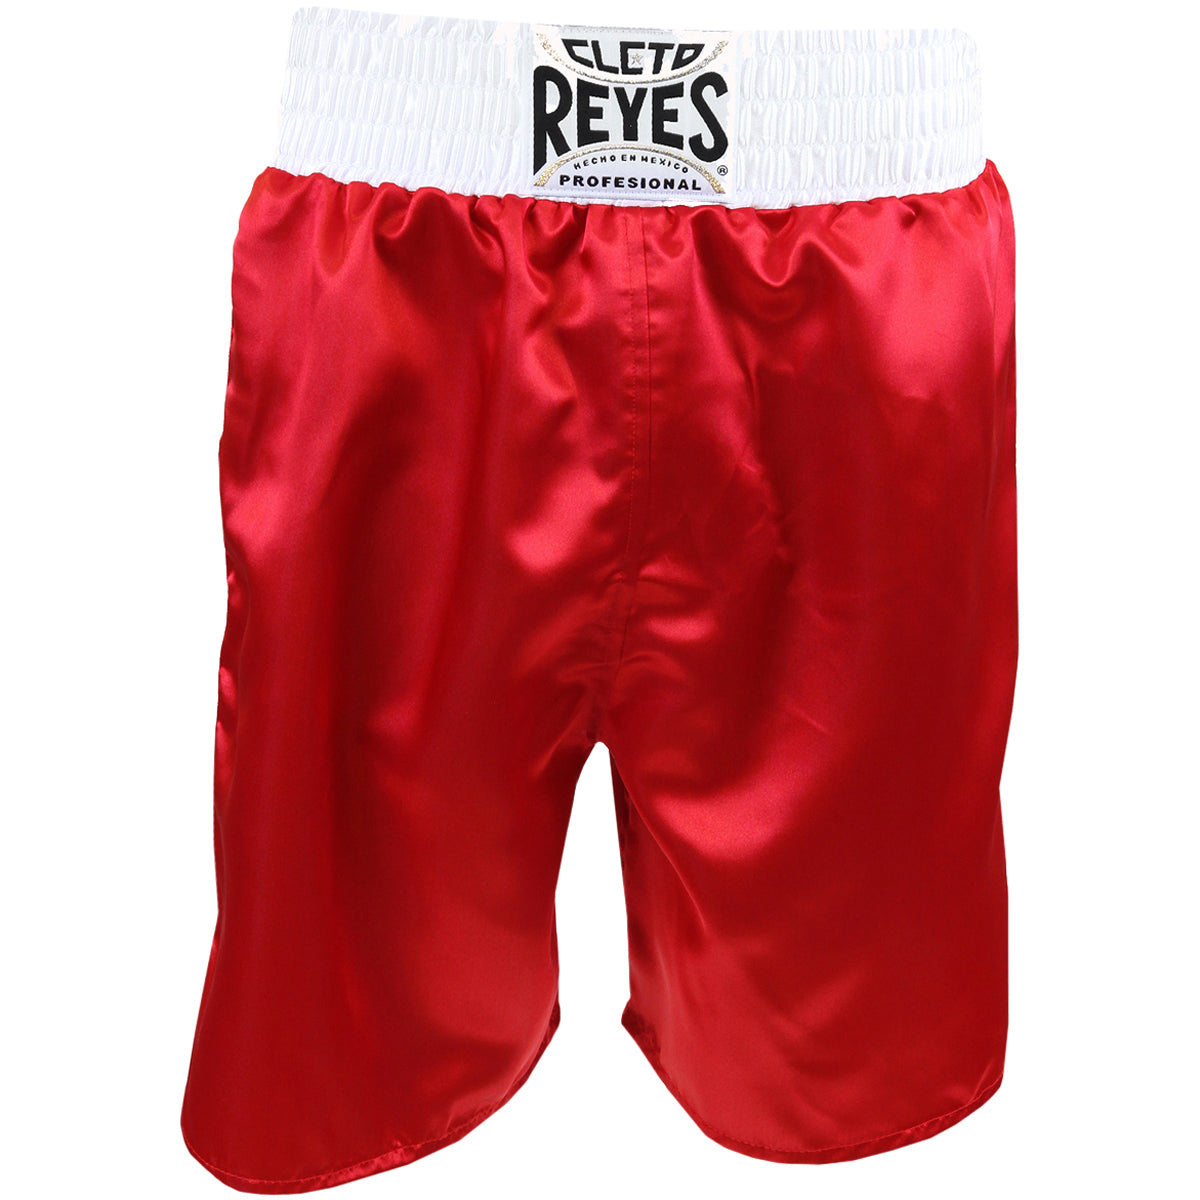 Cleto Reyes Satin Classic Boxing Trunks - Small (32") - Red/White Cleto Reyes